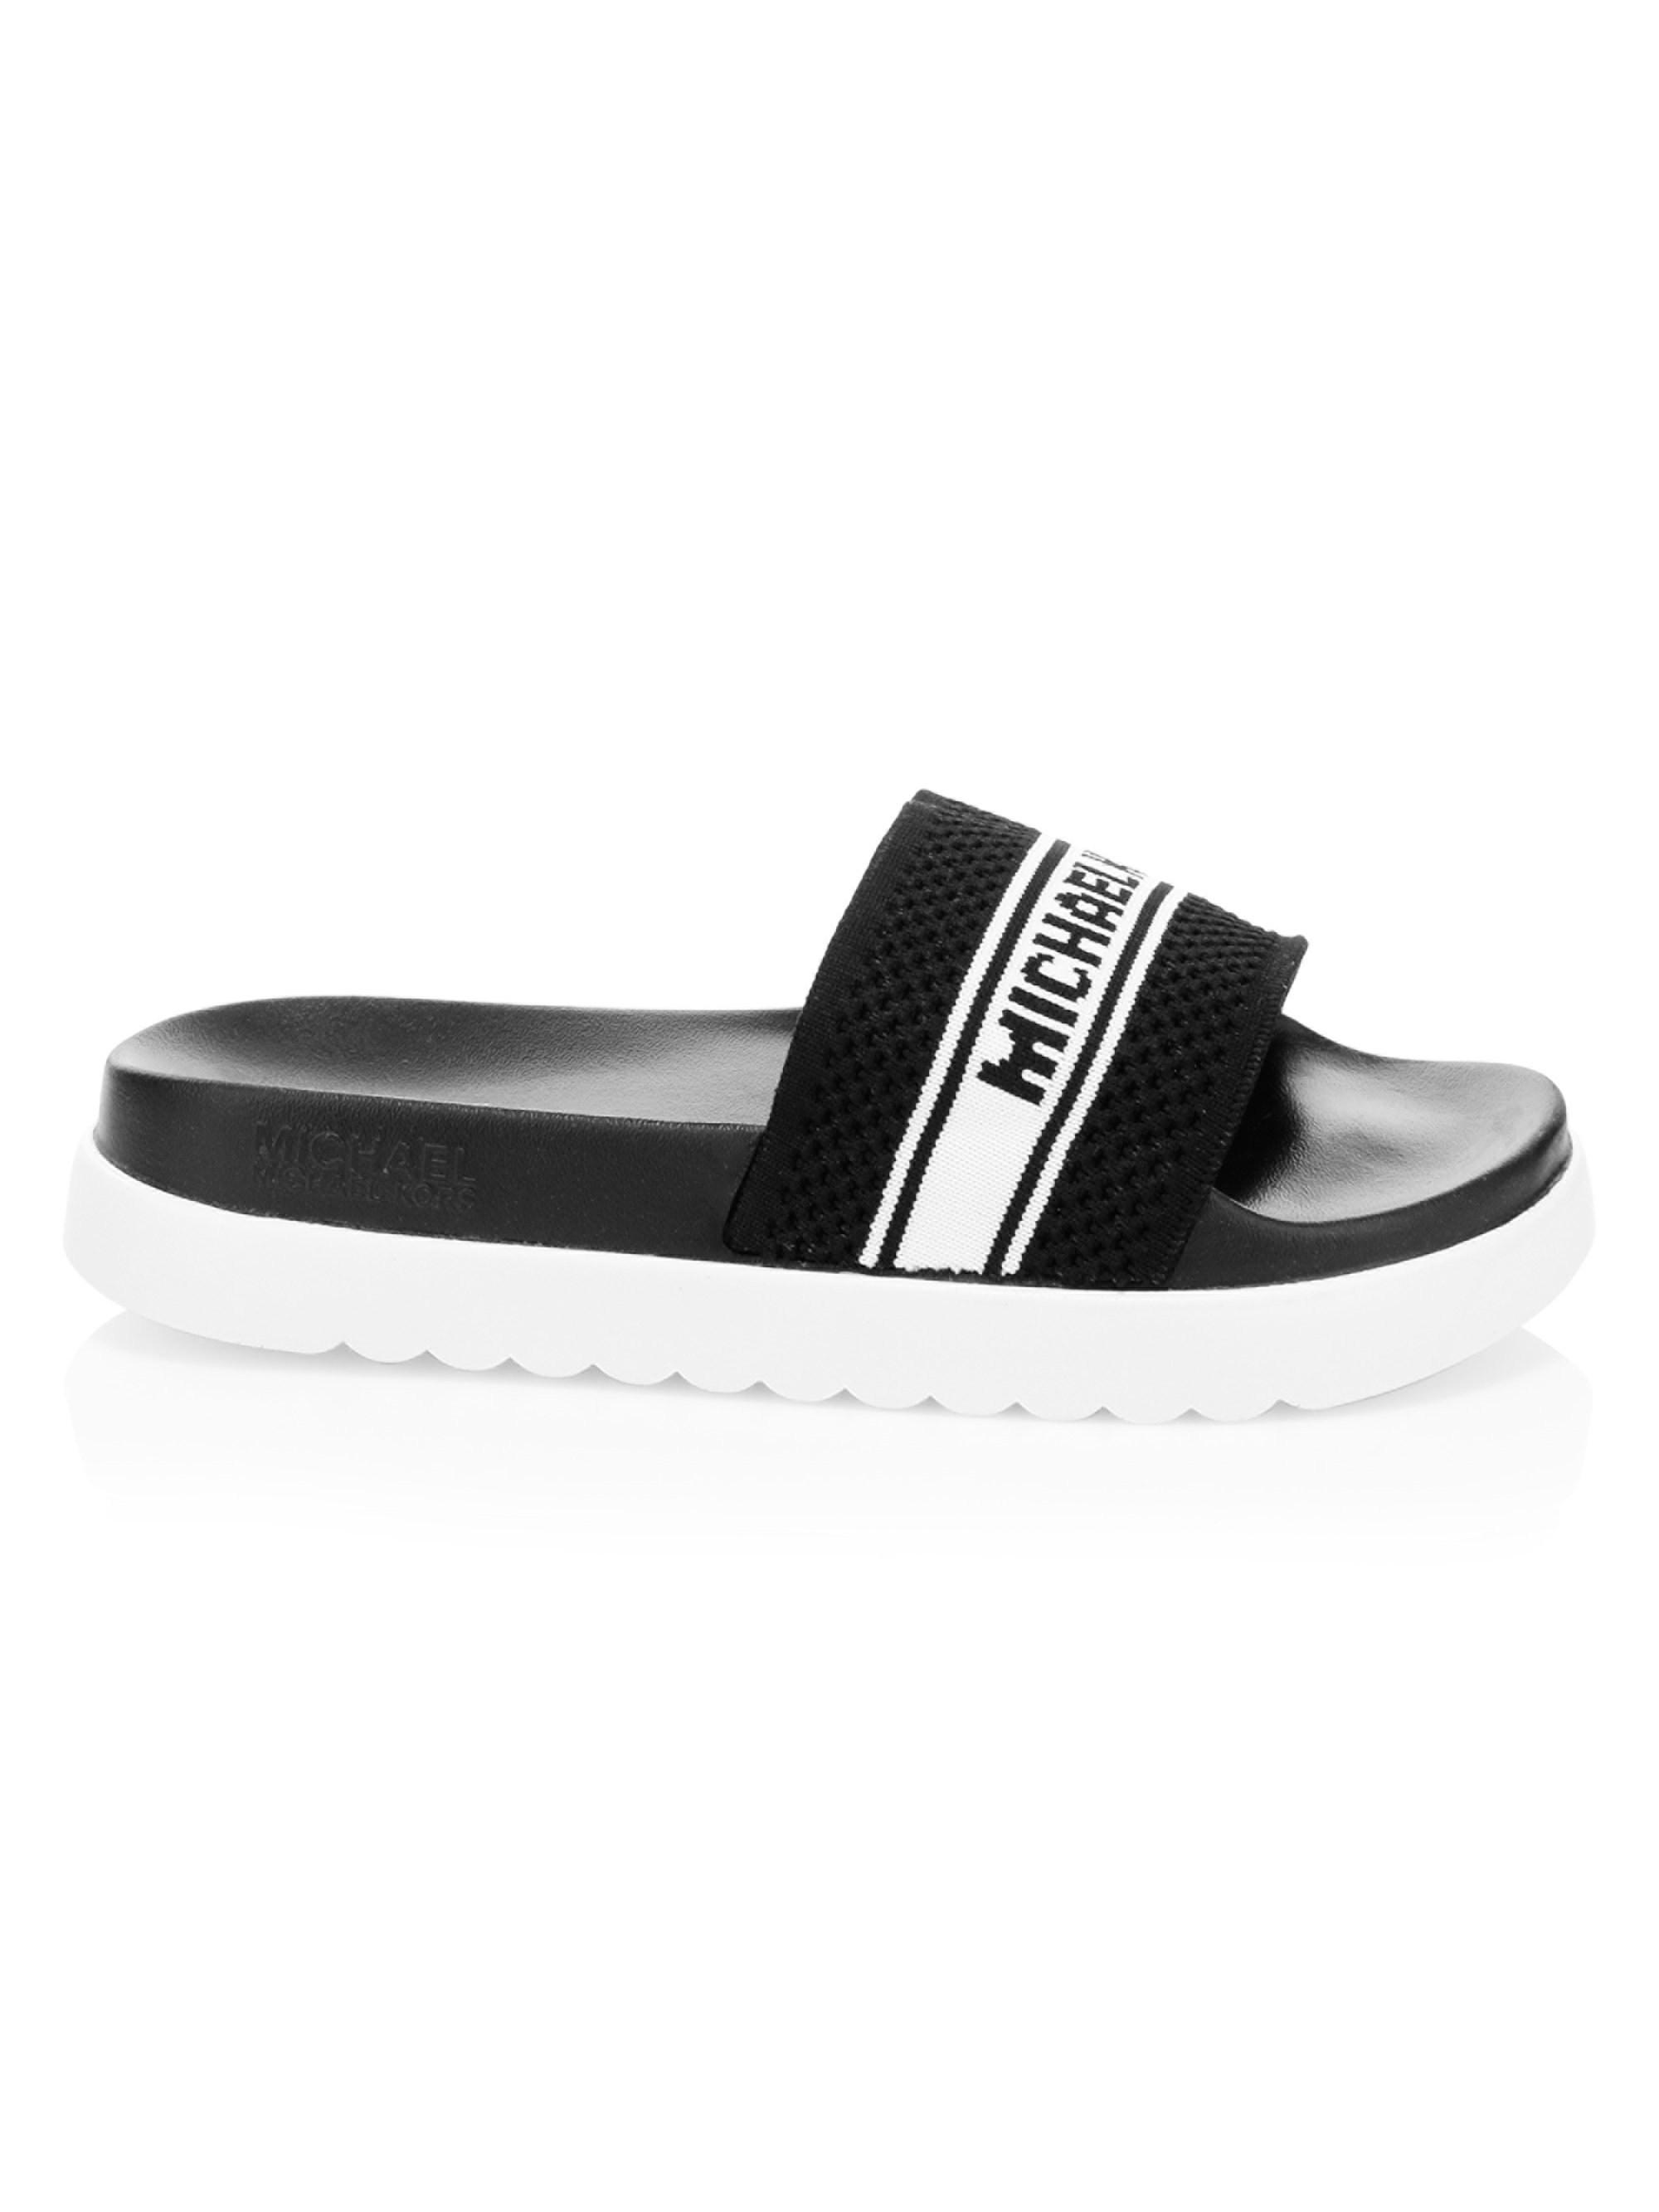 michael kors tyra embellished slide sandal> Latest trends > OFF-68%